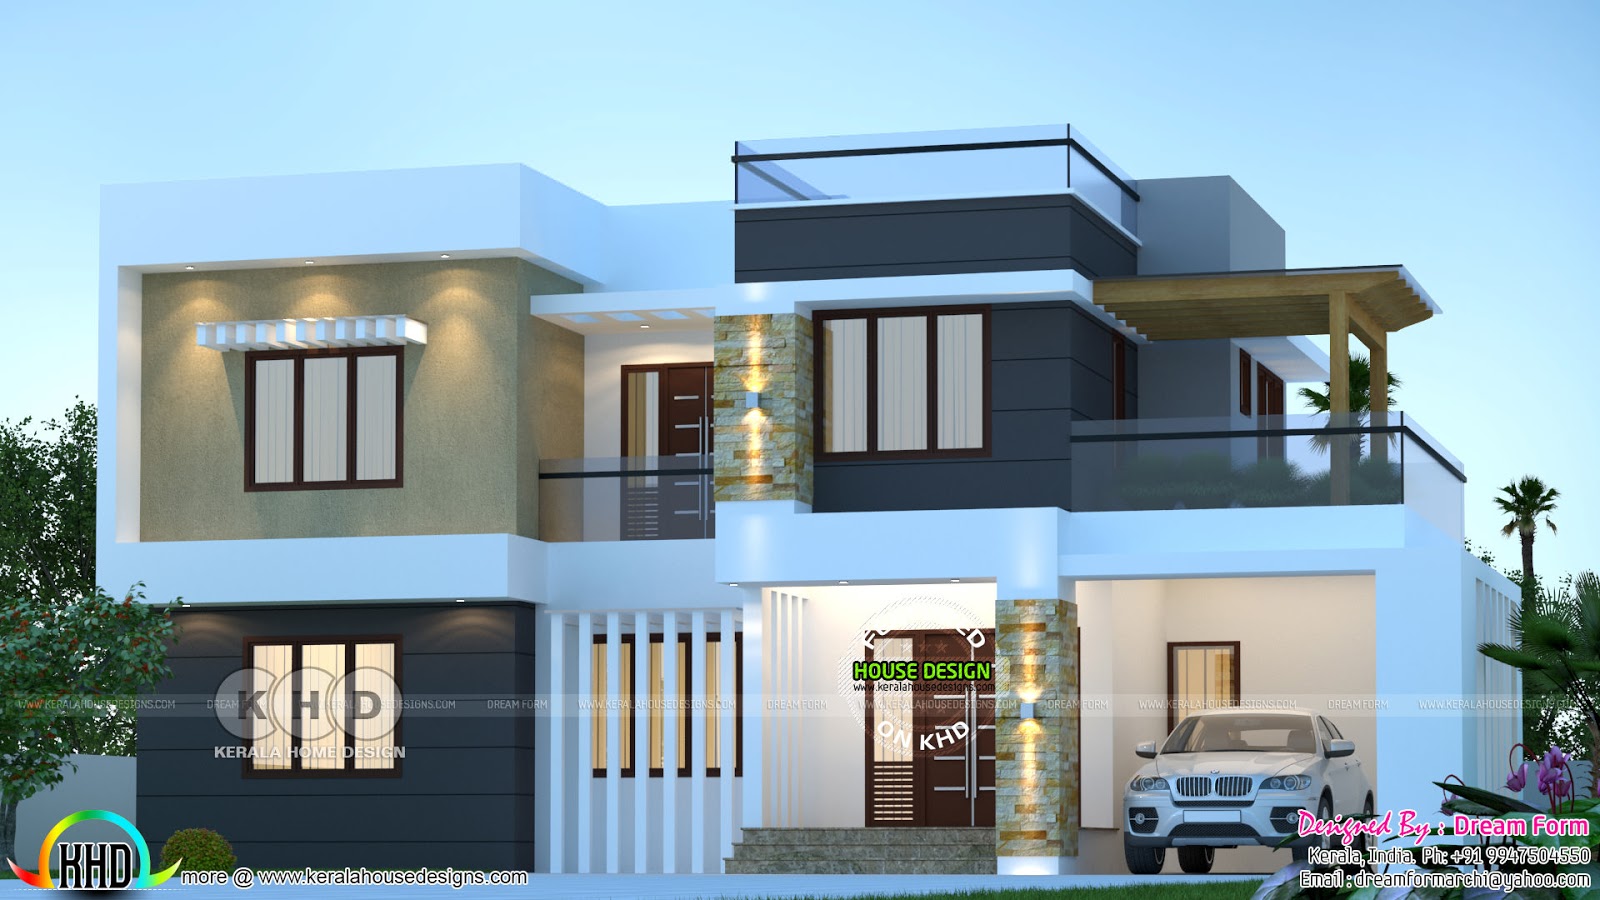 4 bedroom 2150 sq ft modern home design Kerala home 